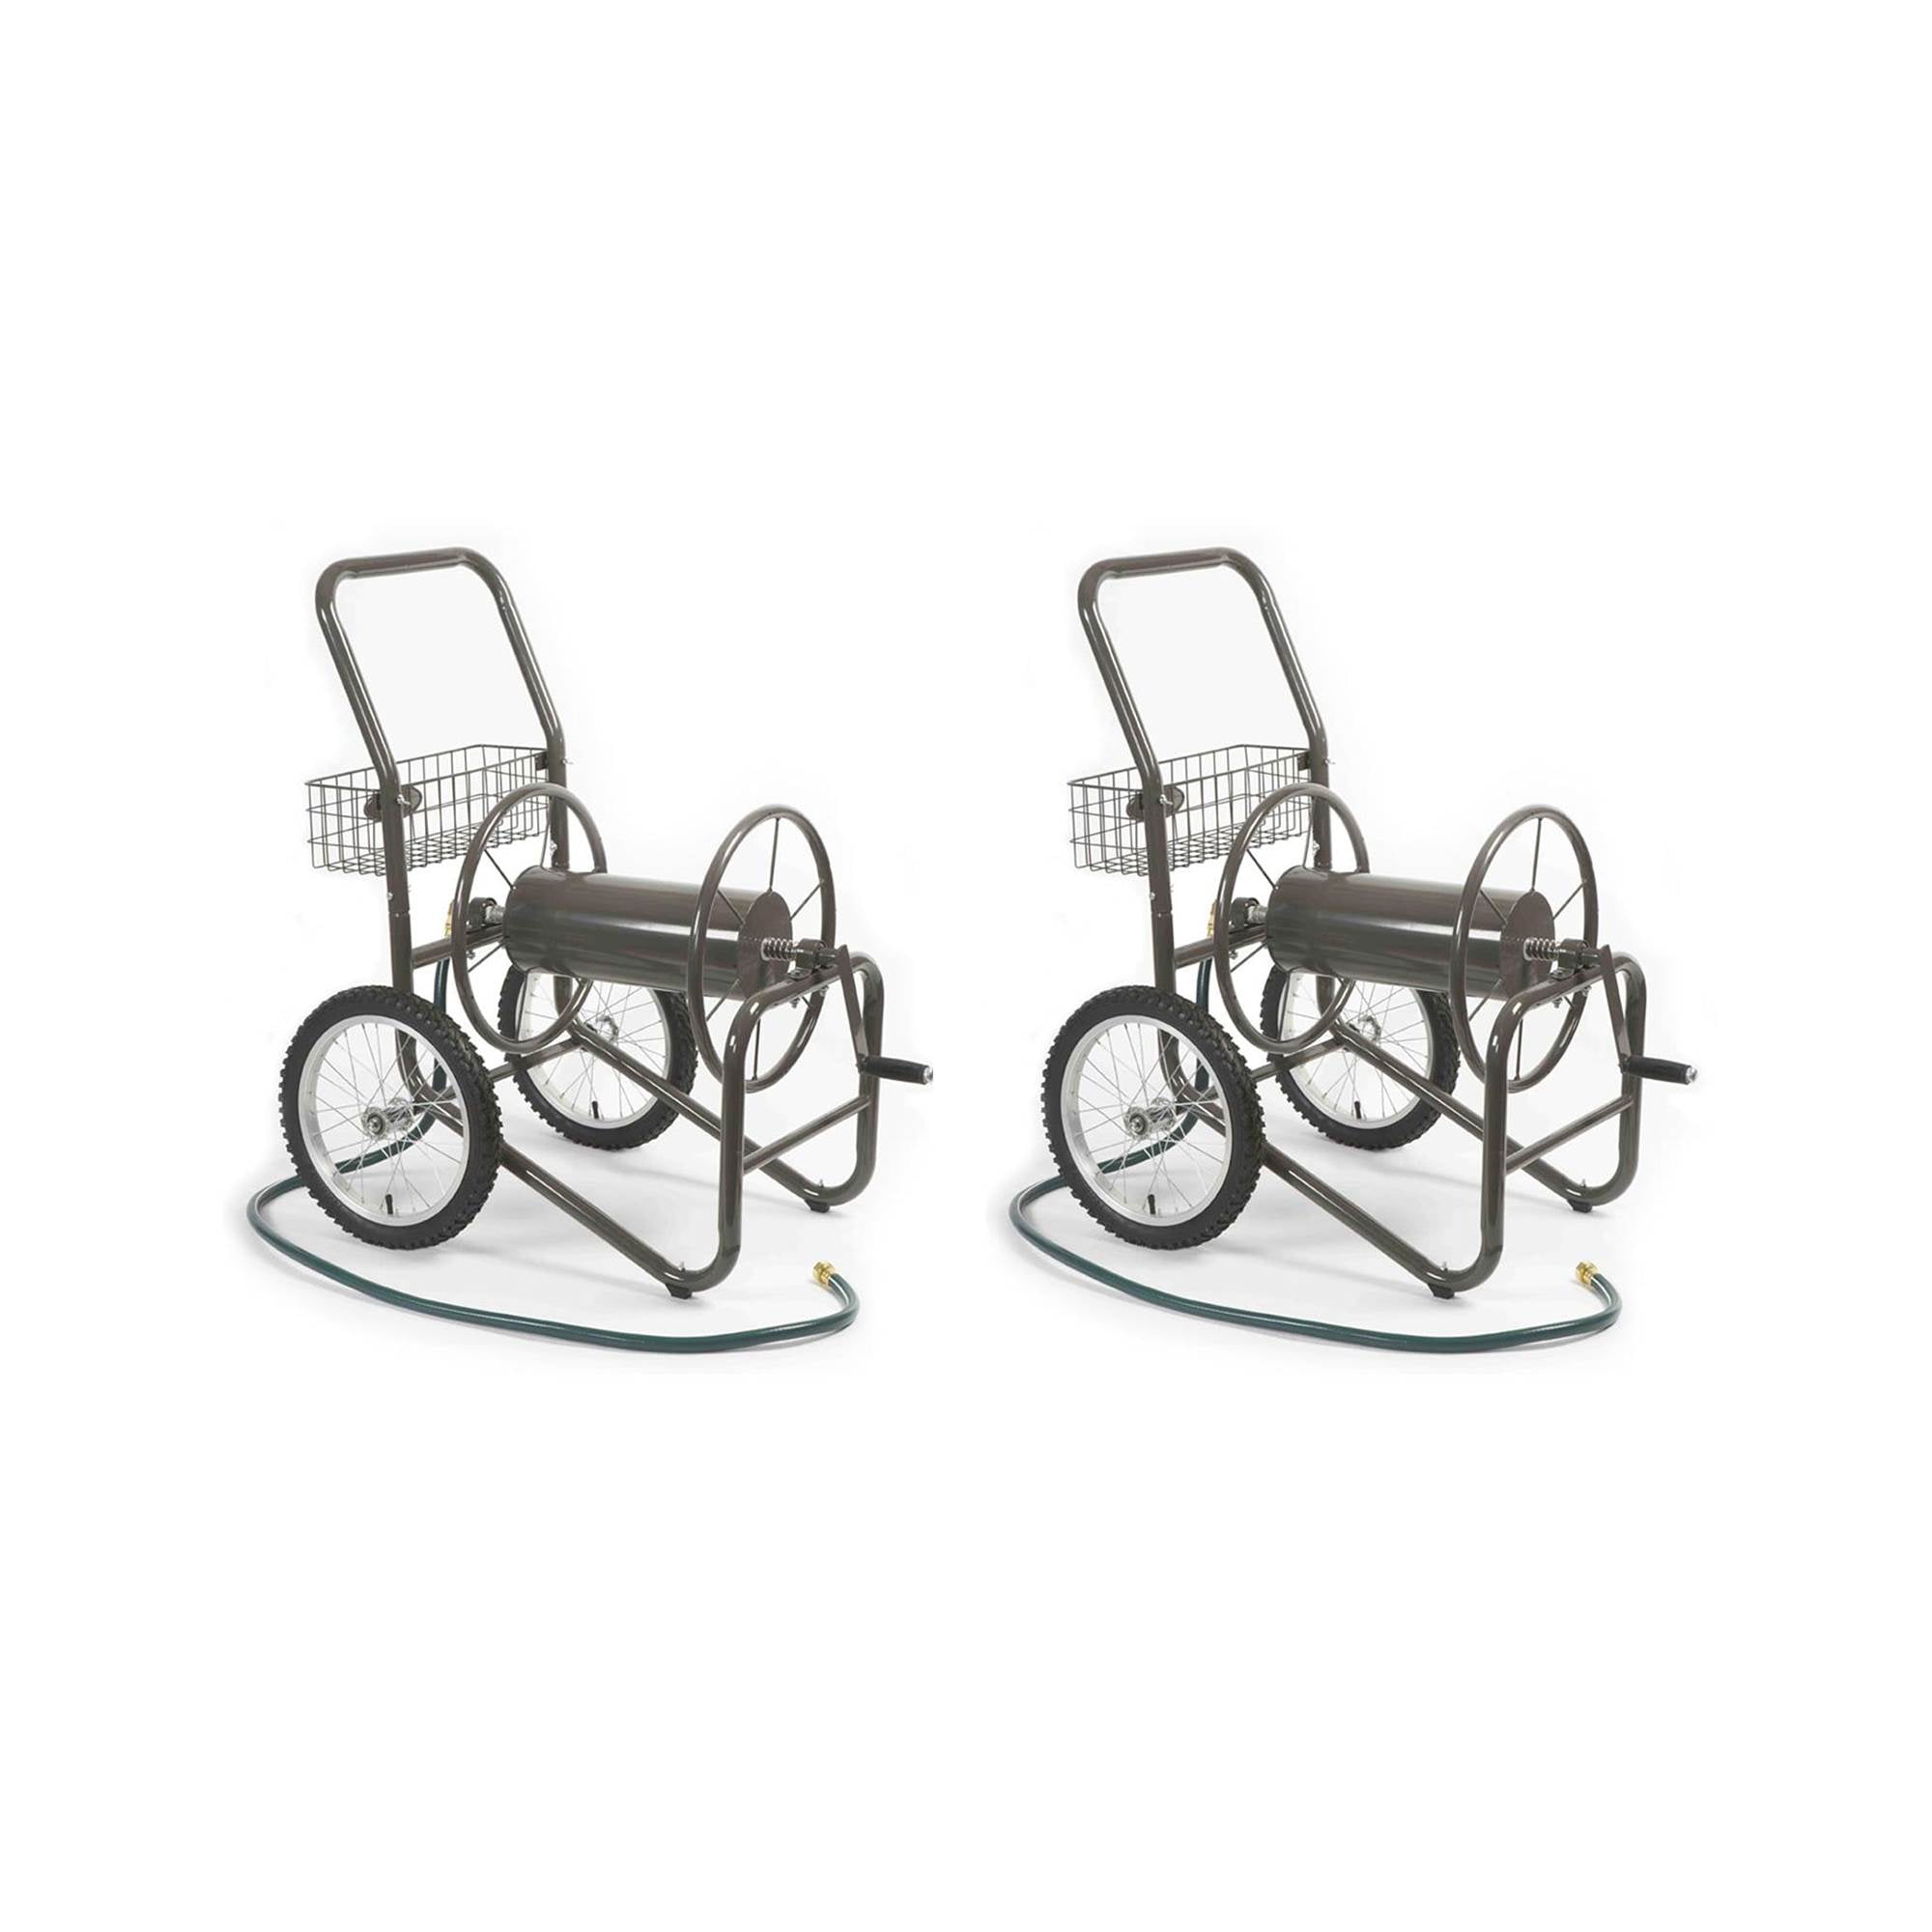 Bronze Details about   Liberty Garden 2 Wheel Steel Frame Water Hose Reel Basket Cart 2 Pack 